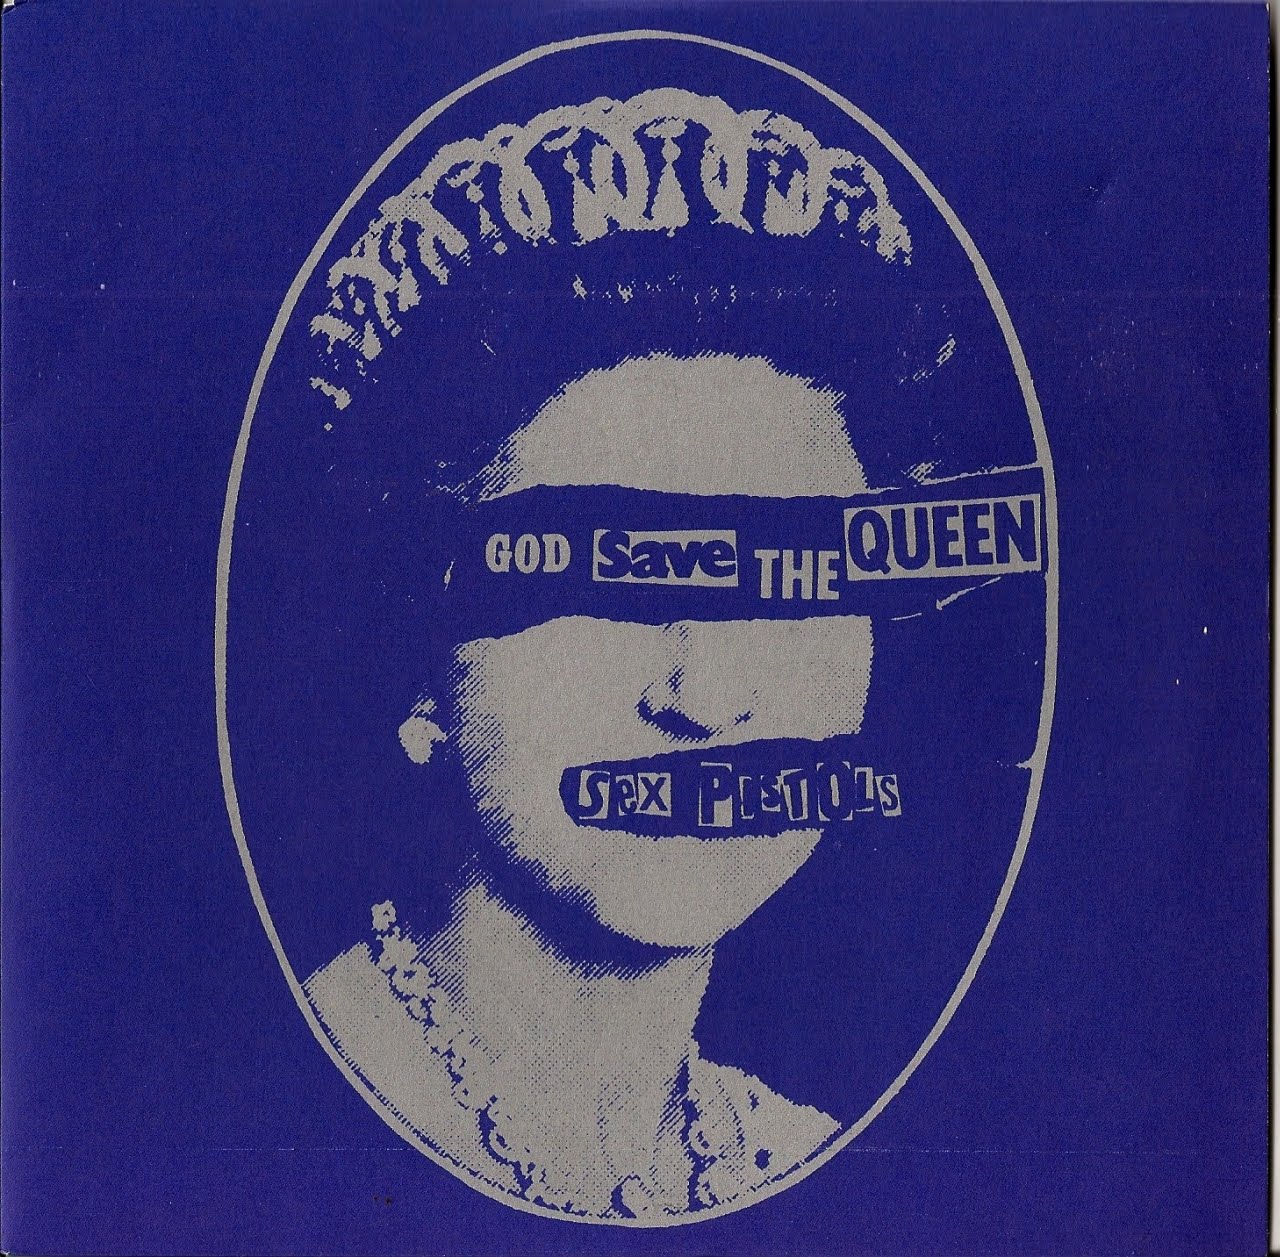 Sex Pistols : 2 45rpm Vinyl Singles - God save the Queen - Preety Vacant.